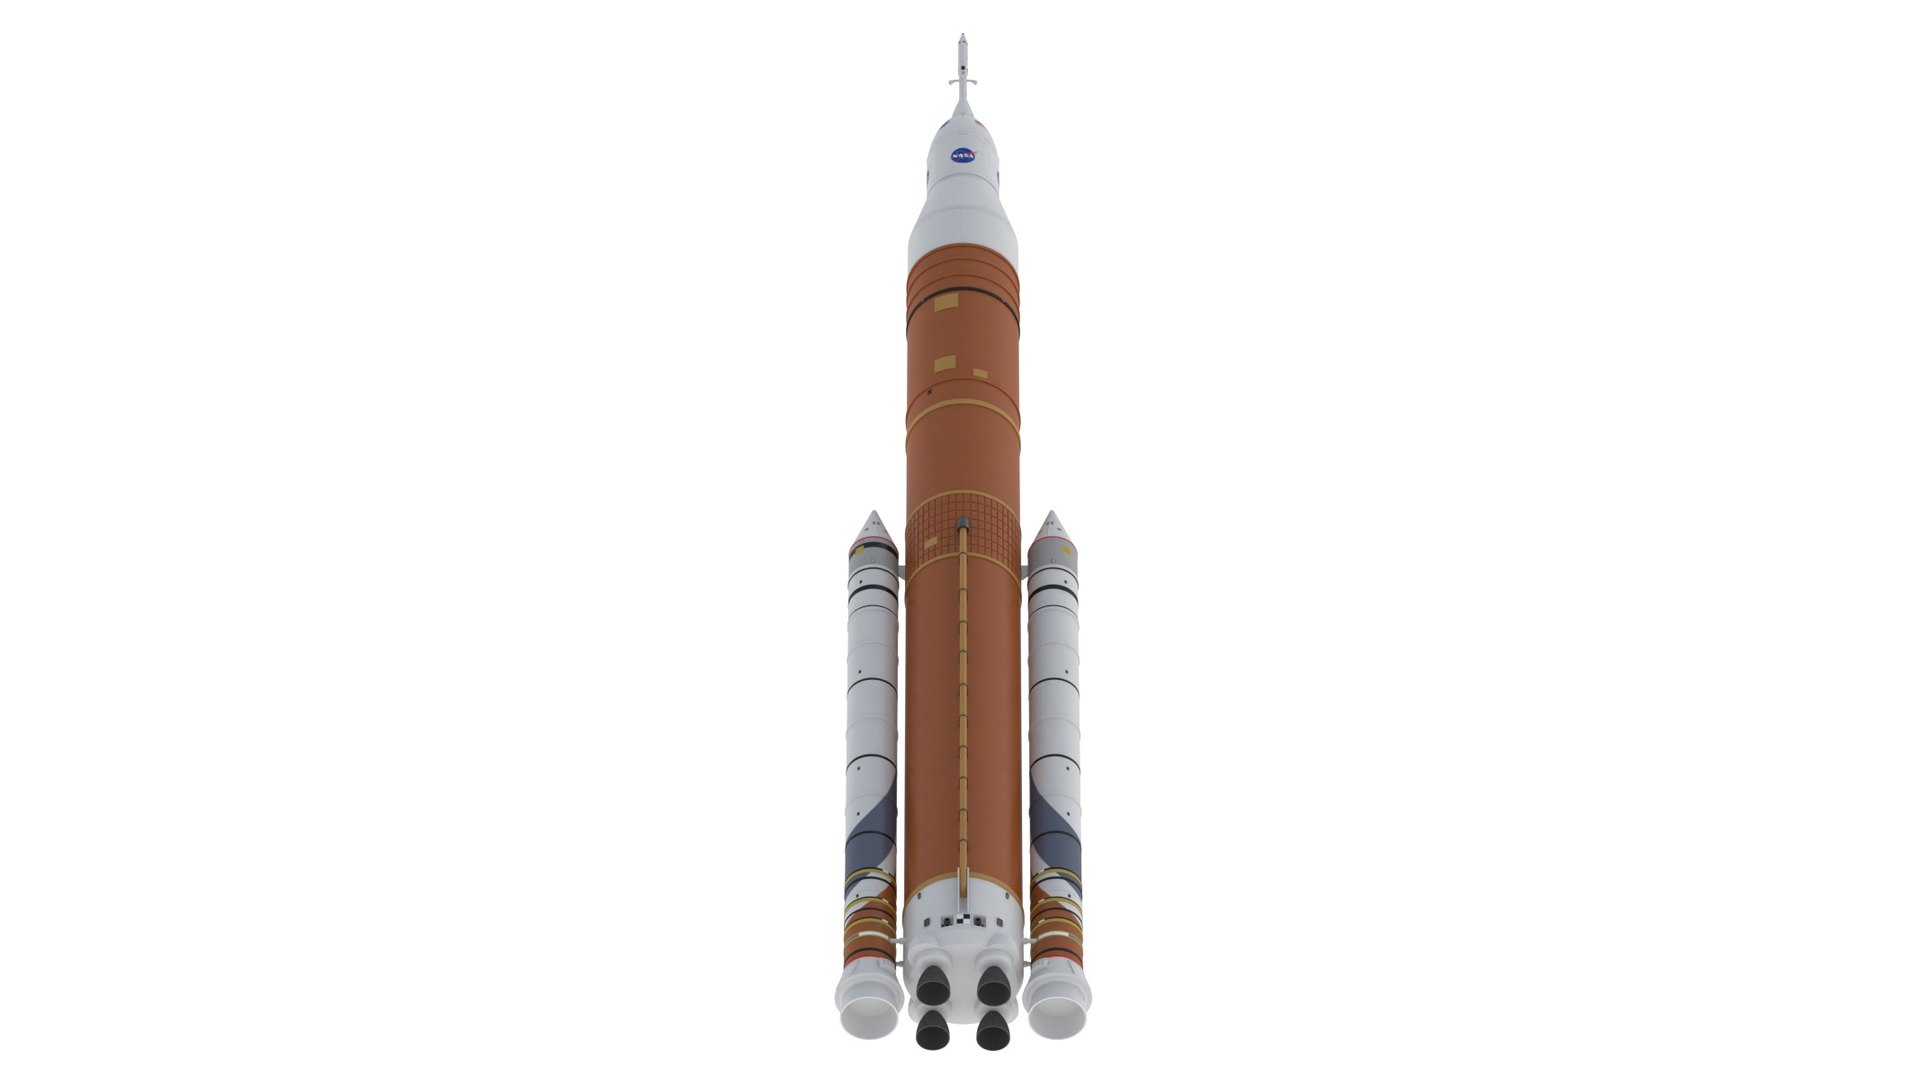 Sls block rocket 3D model - TurboSquid 1575368